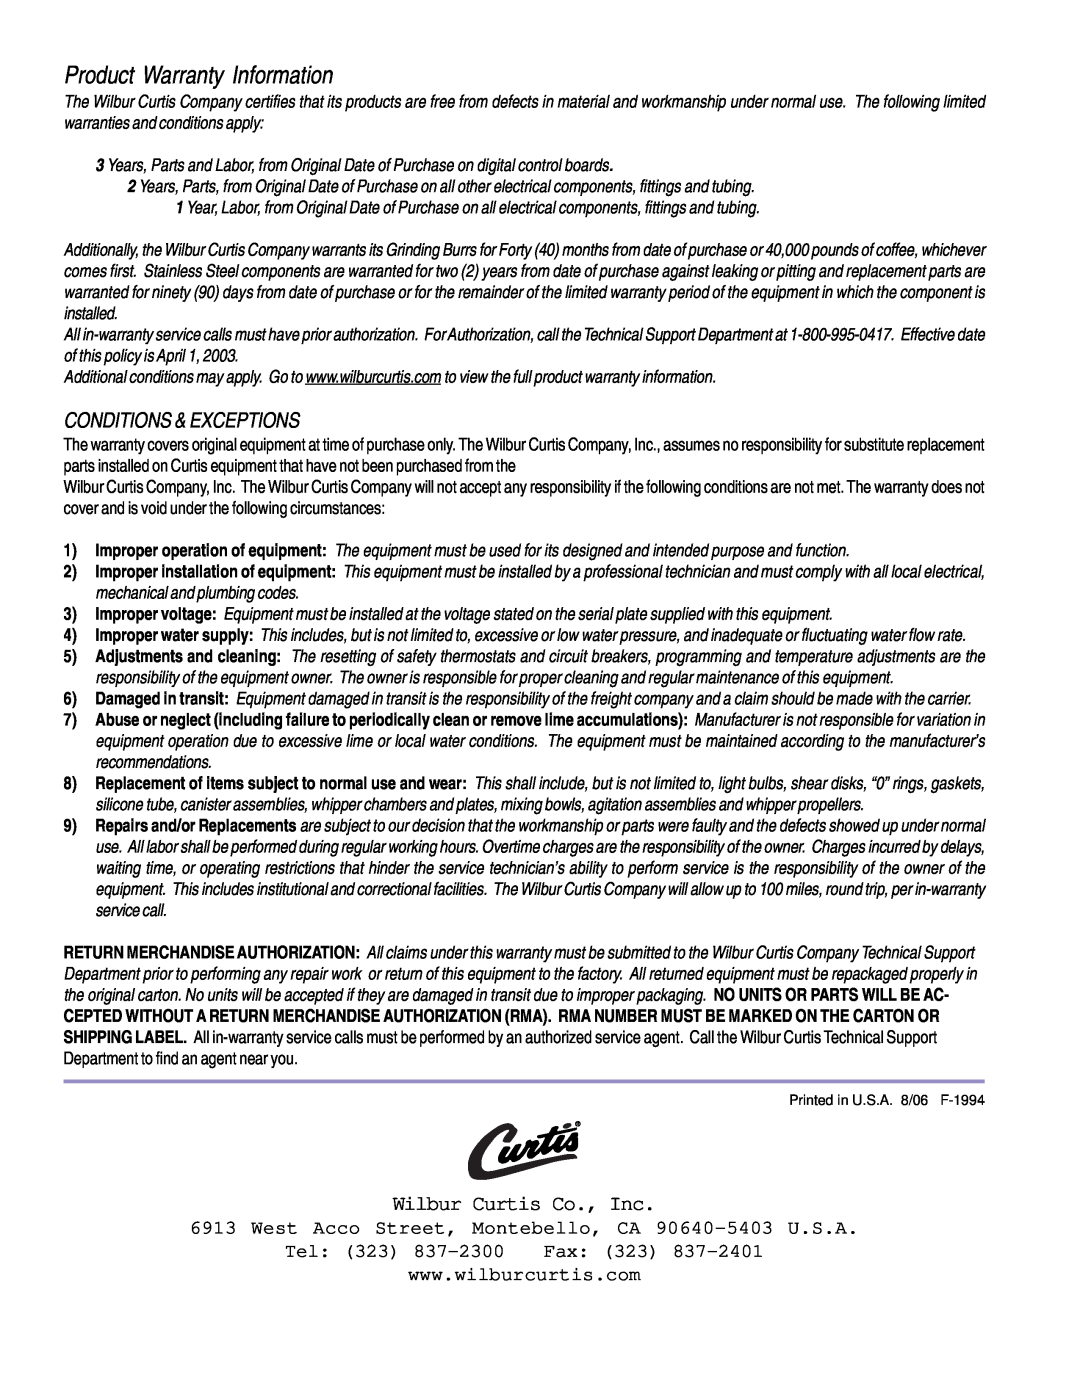 Wibur Curtis Company C500APT service manual Product Warranty Information, Wilbur Curtis Co., Inc, Tel, Fax 